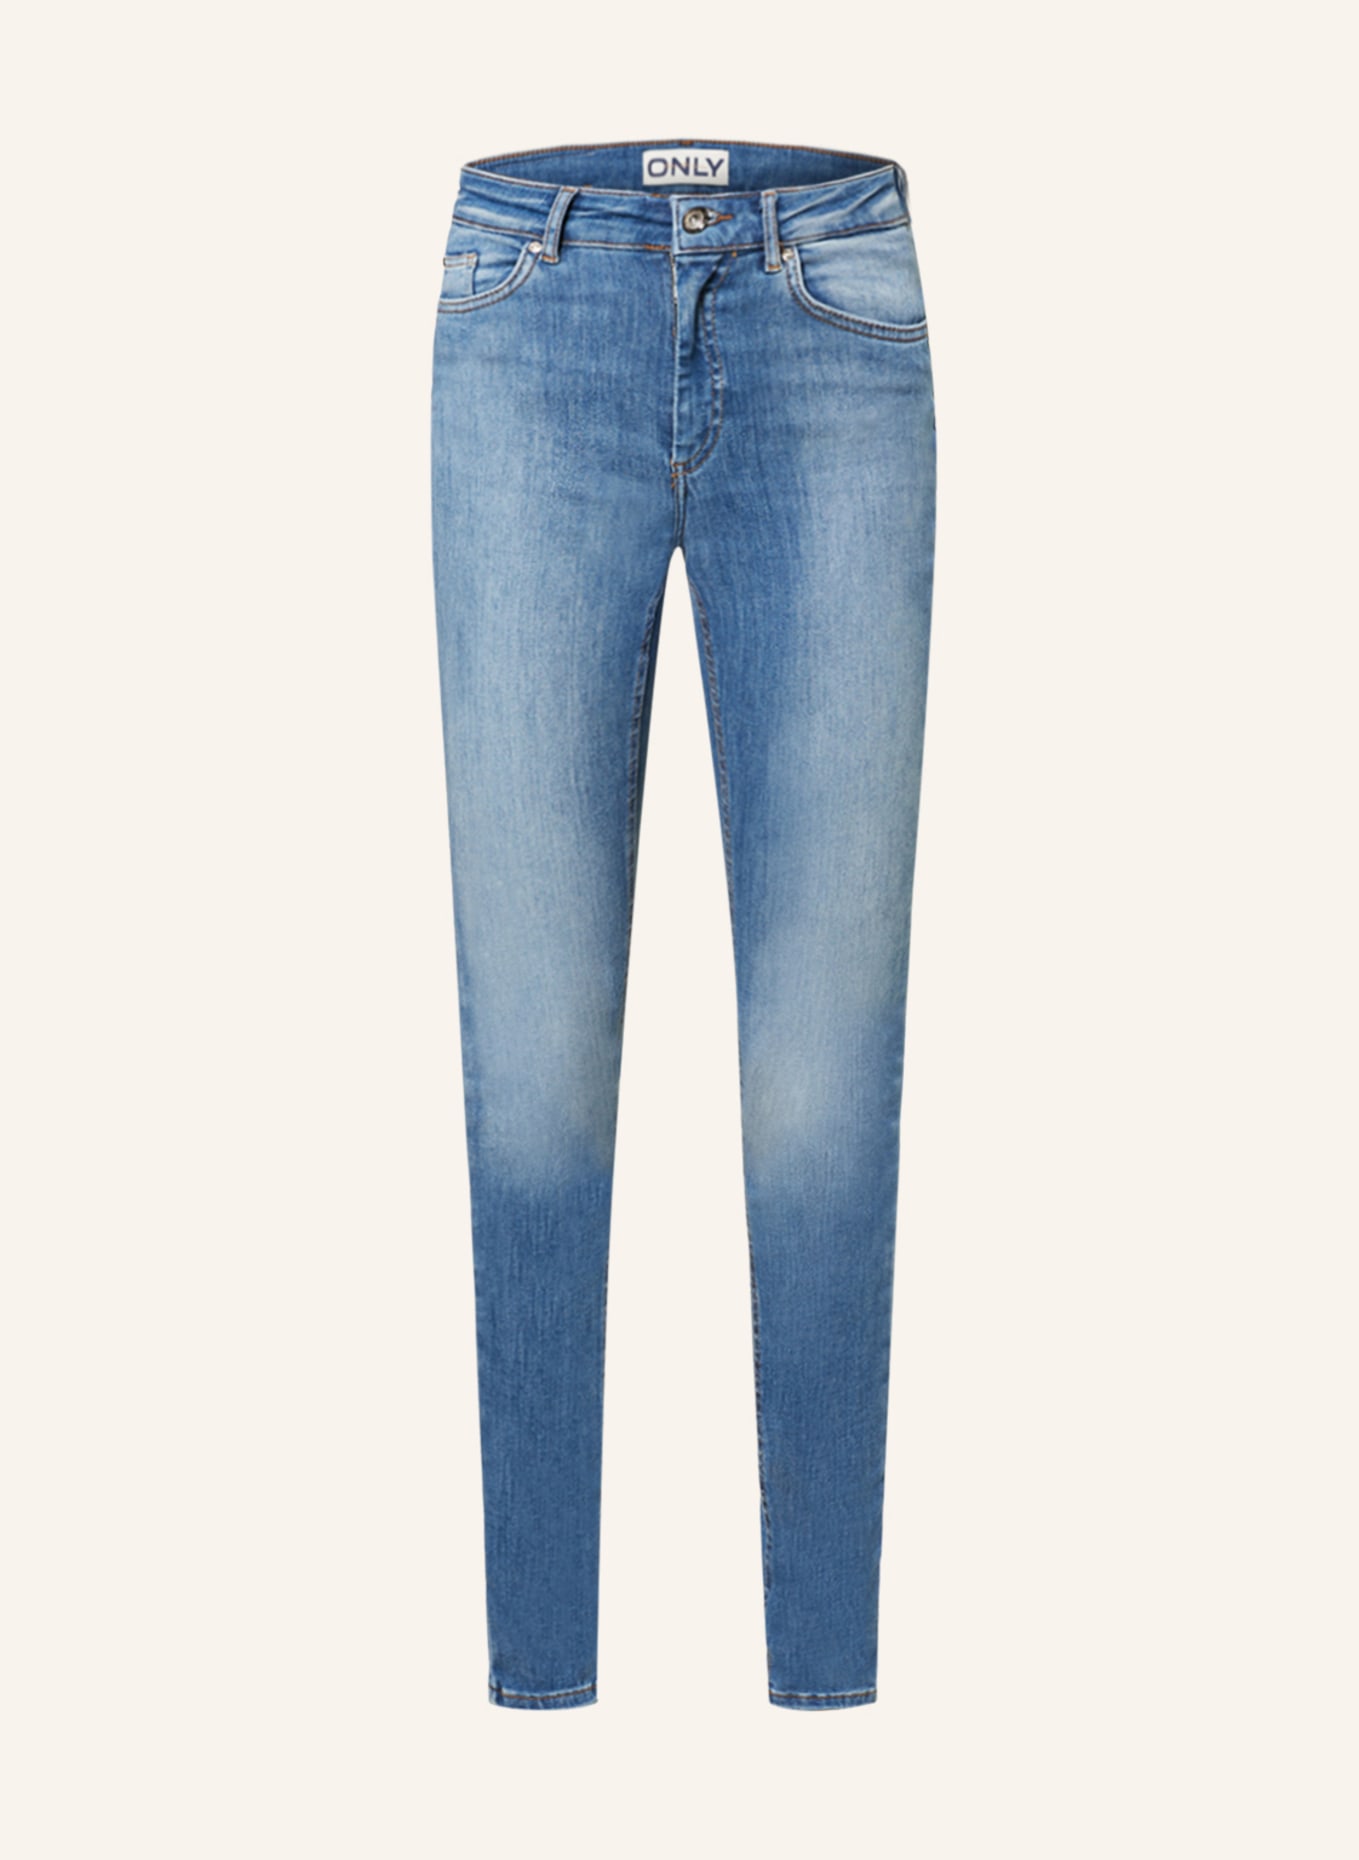 ONLY MOM FIT JEANS - Slim fit jeans - dark blue denim/dark-blue denim -  Zalando.de